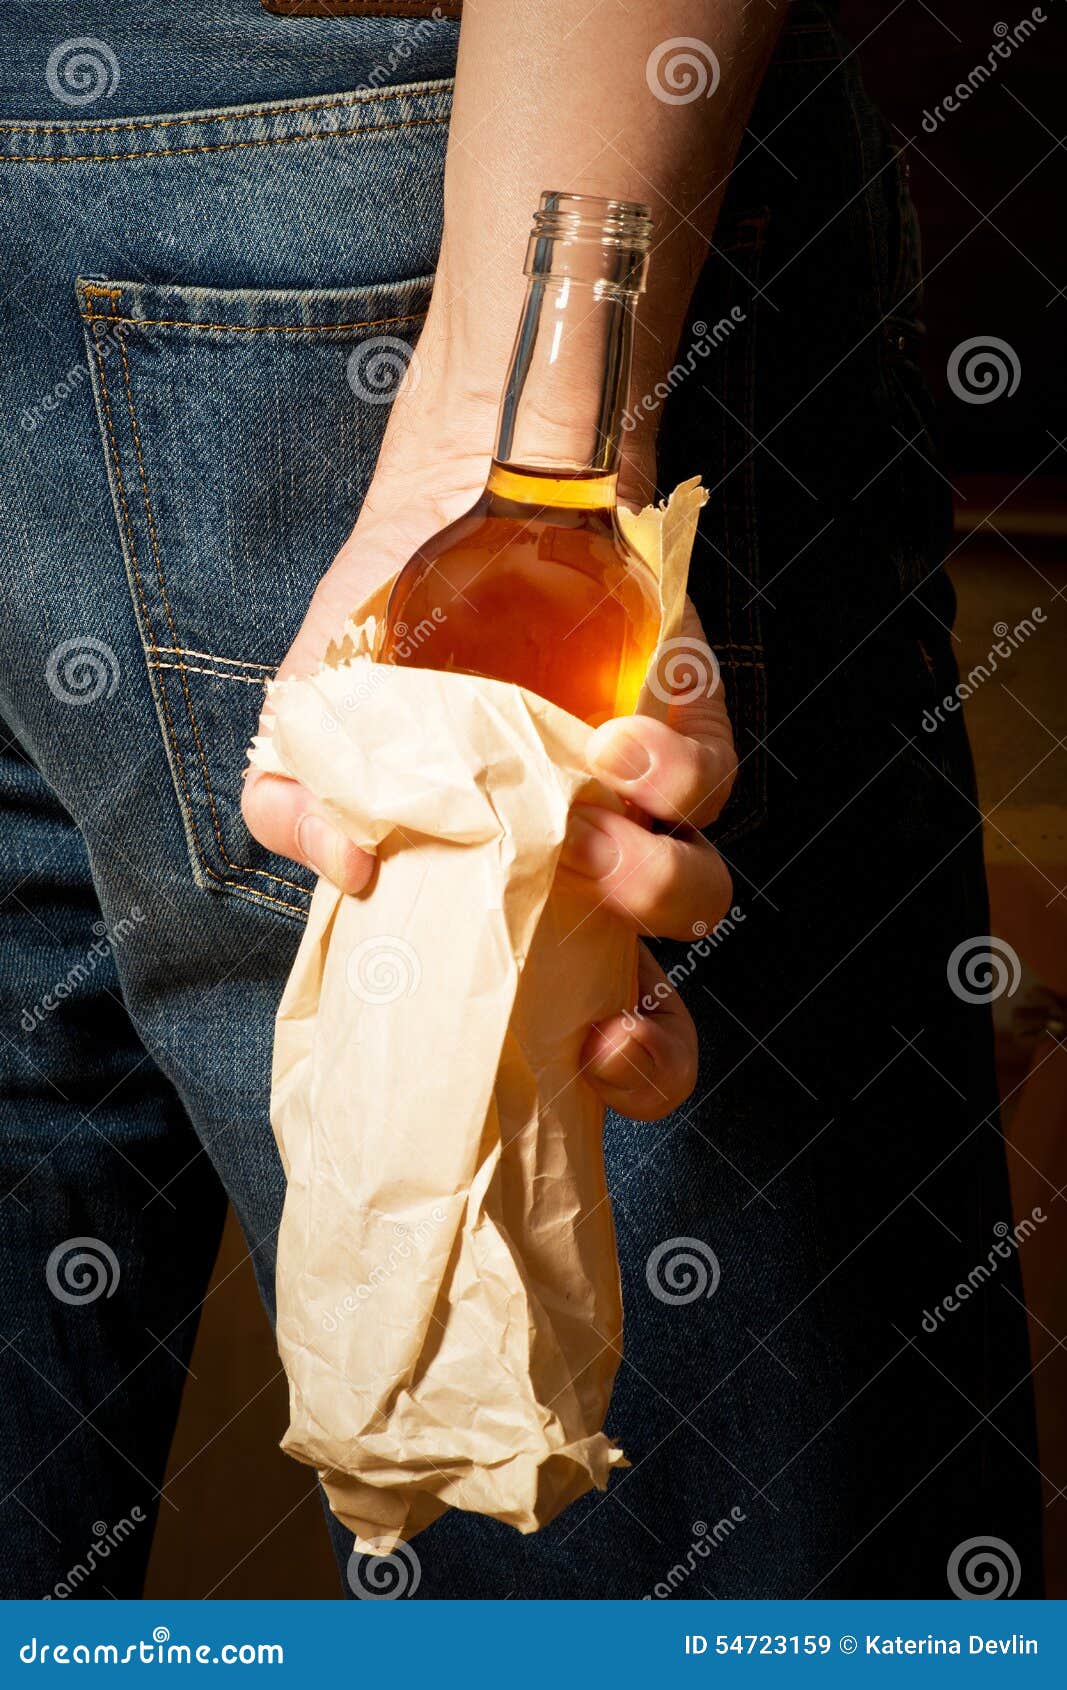 hard drinker hides a bottle